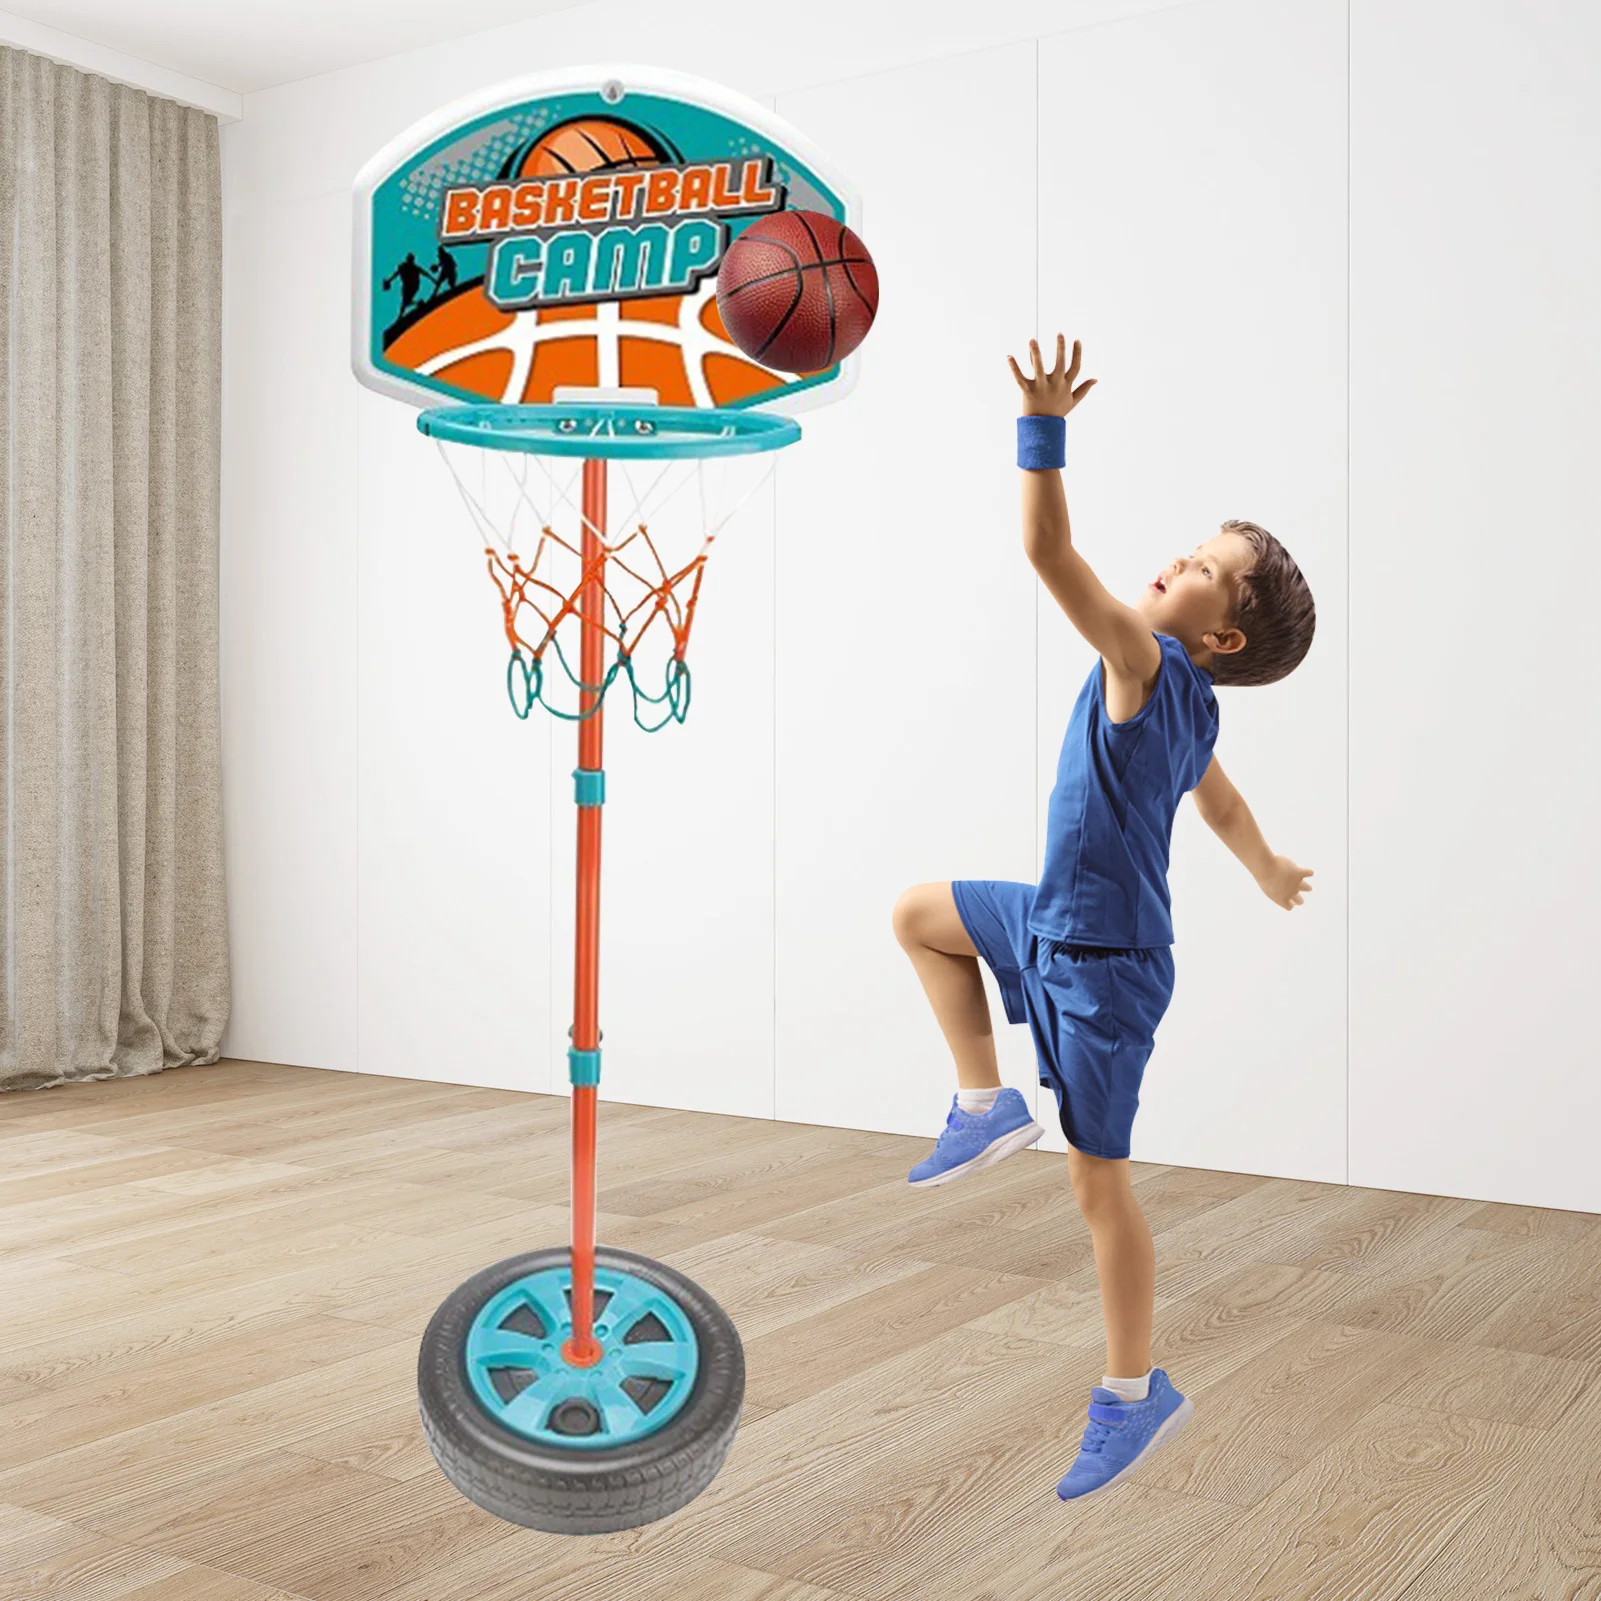 

Outdoor Sport Basketball Playing Toy Set Adjustable Stand Basket Holder Hoop Goal Game Mini Indoor Child Yard Game Boy Toys Gift